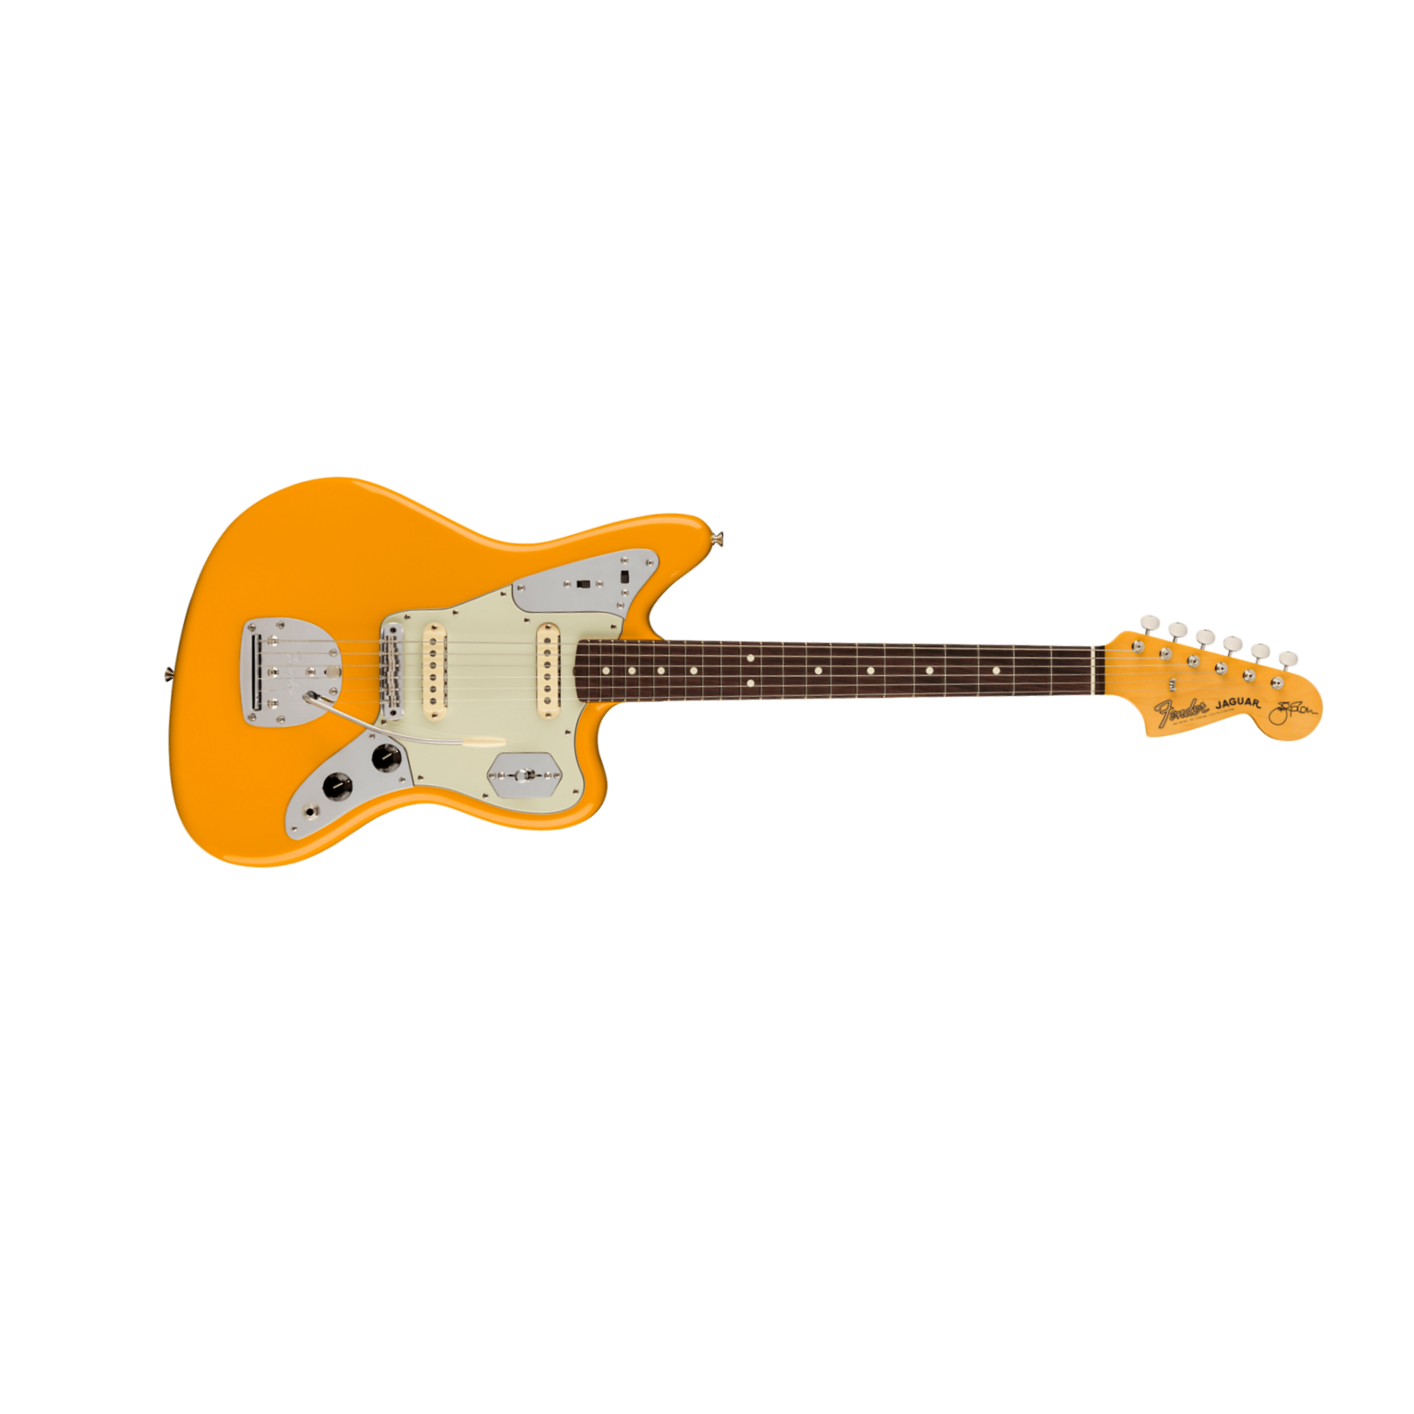 Fender Jaguar Johnny Marr Signature 2s Trem Rw - Fever Dream Yellow - Retro-rock elektrische gitaar - Main picture